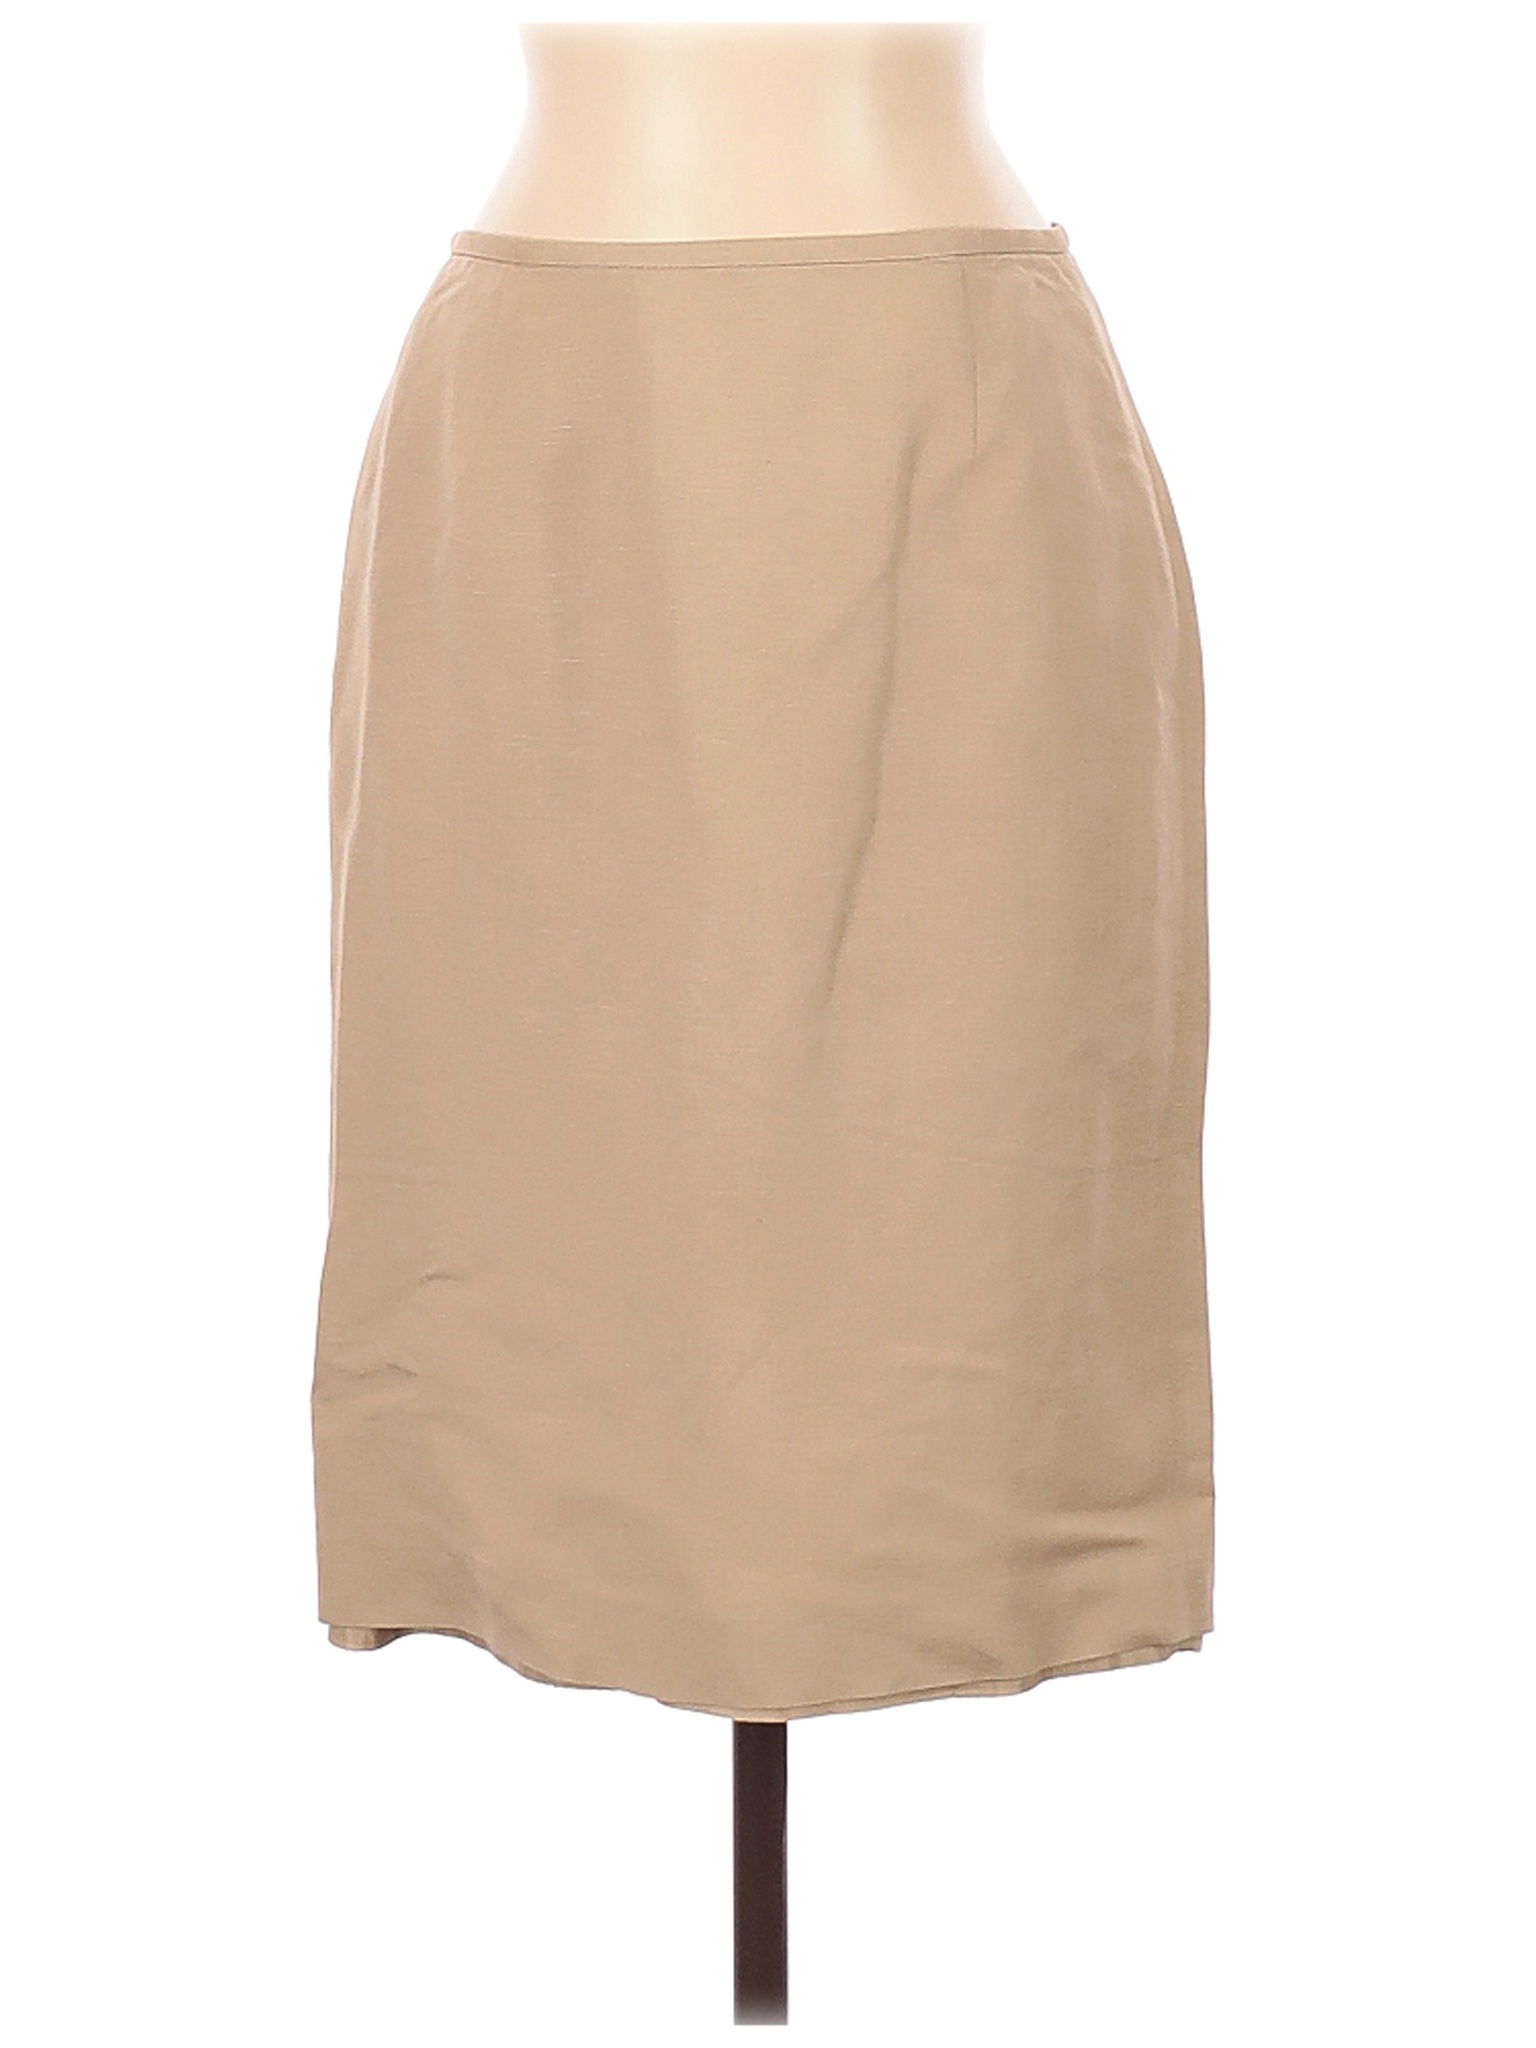 Calvin Klein Women Brown Casual Skirt 2 | eBay